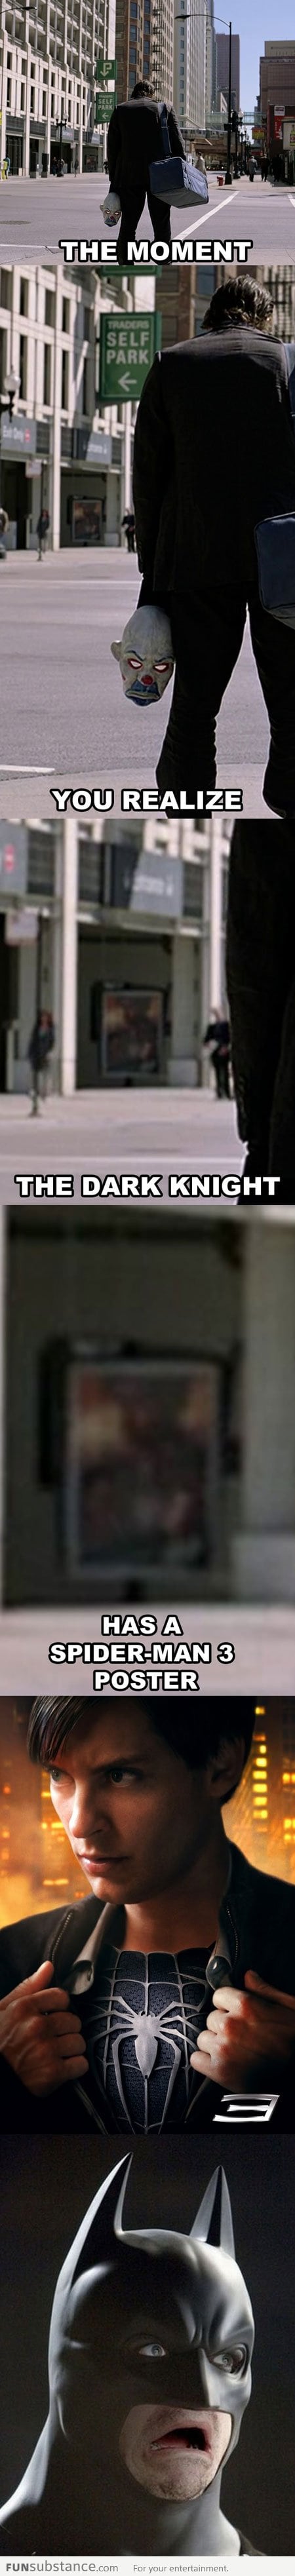 The Dark Knight hidden advertisement